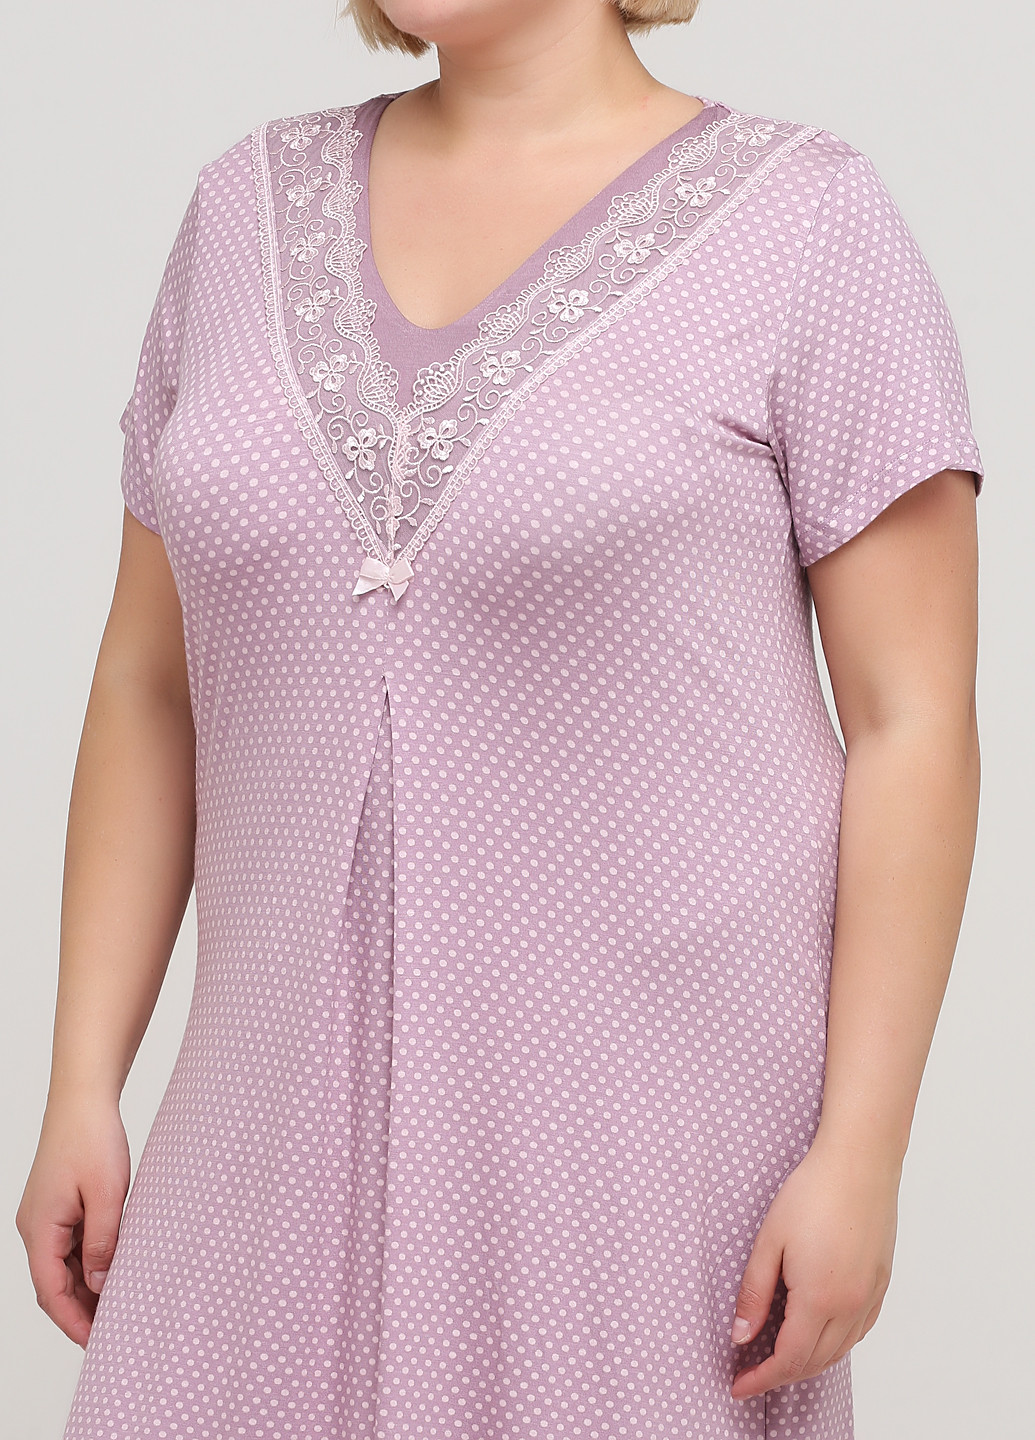 Ночная рубашка Cotpark сердечки розово-лиловая домашняя трикотаж, вискоза